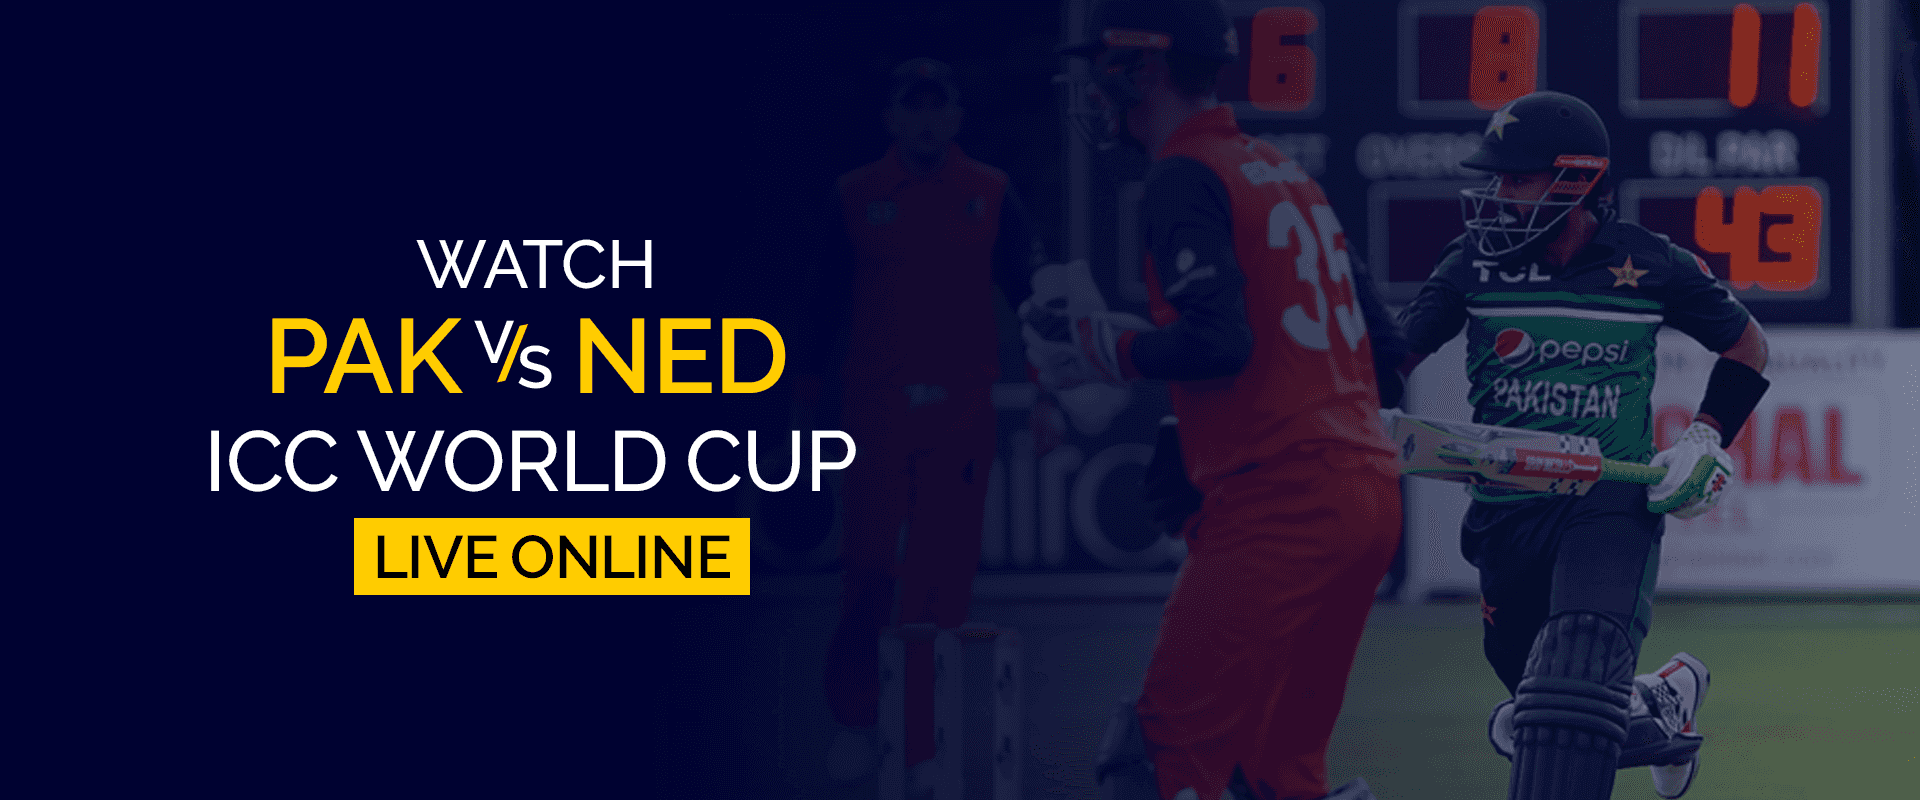 Se PAK vs NED ICC World Cup live online